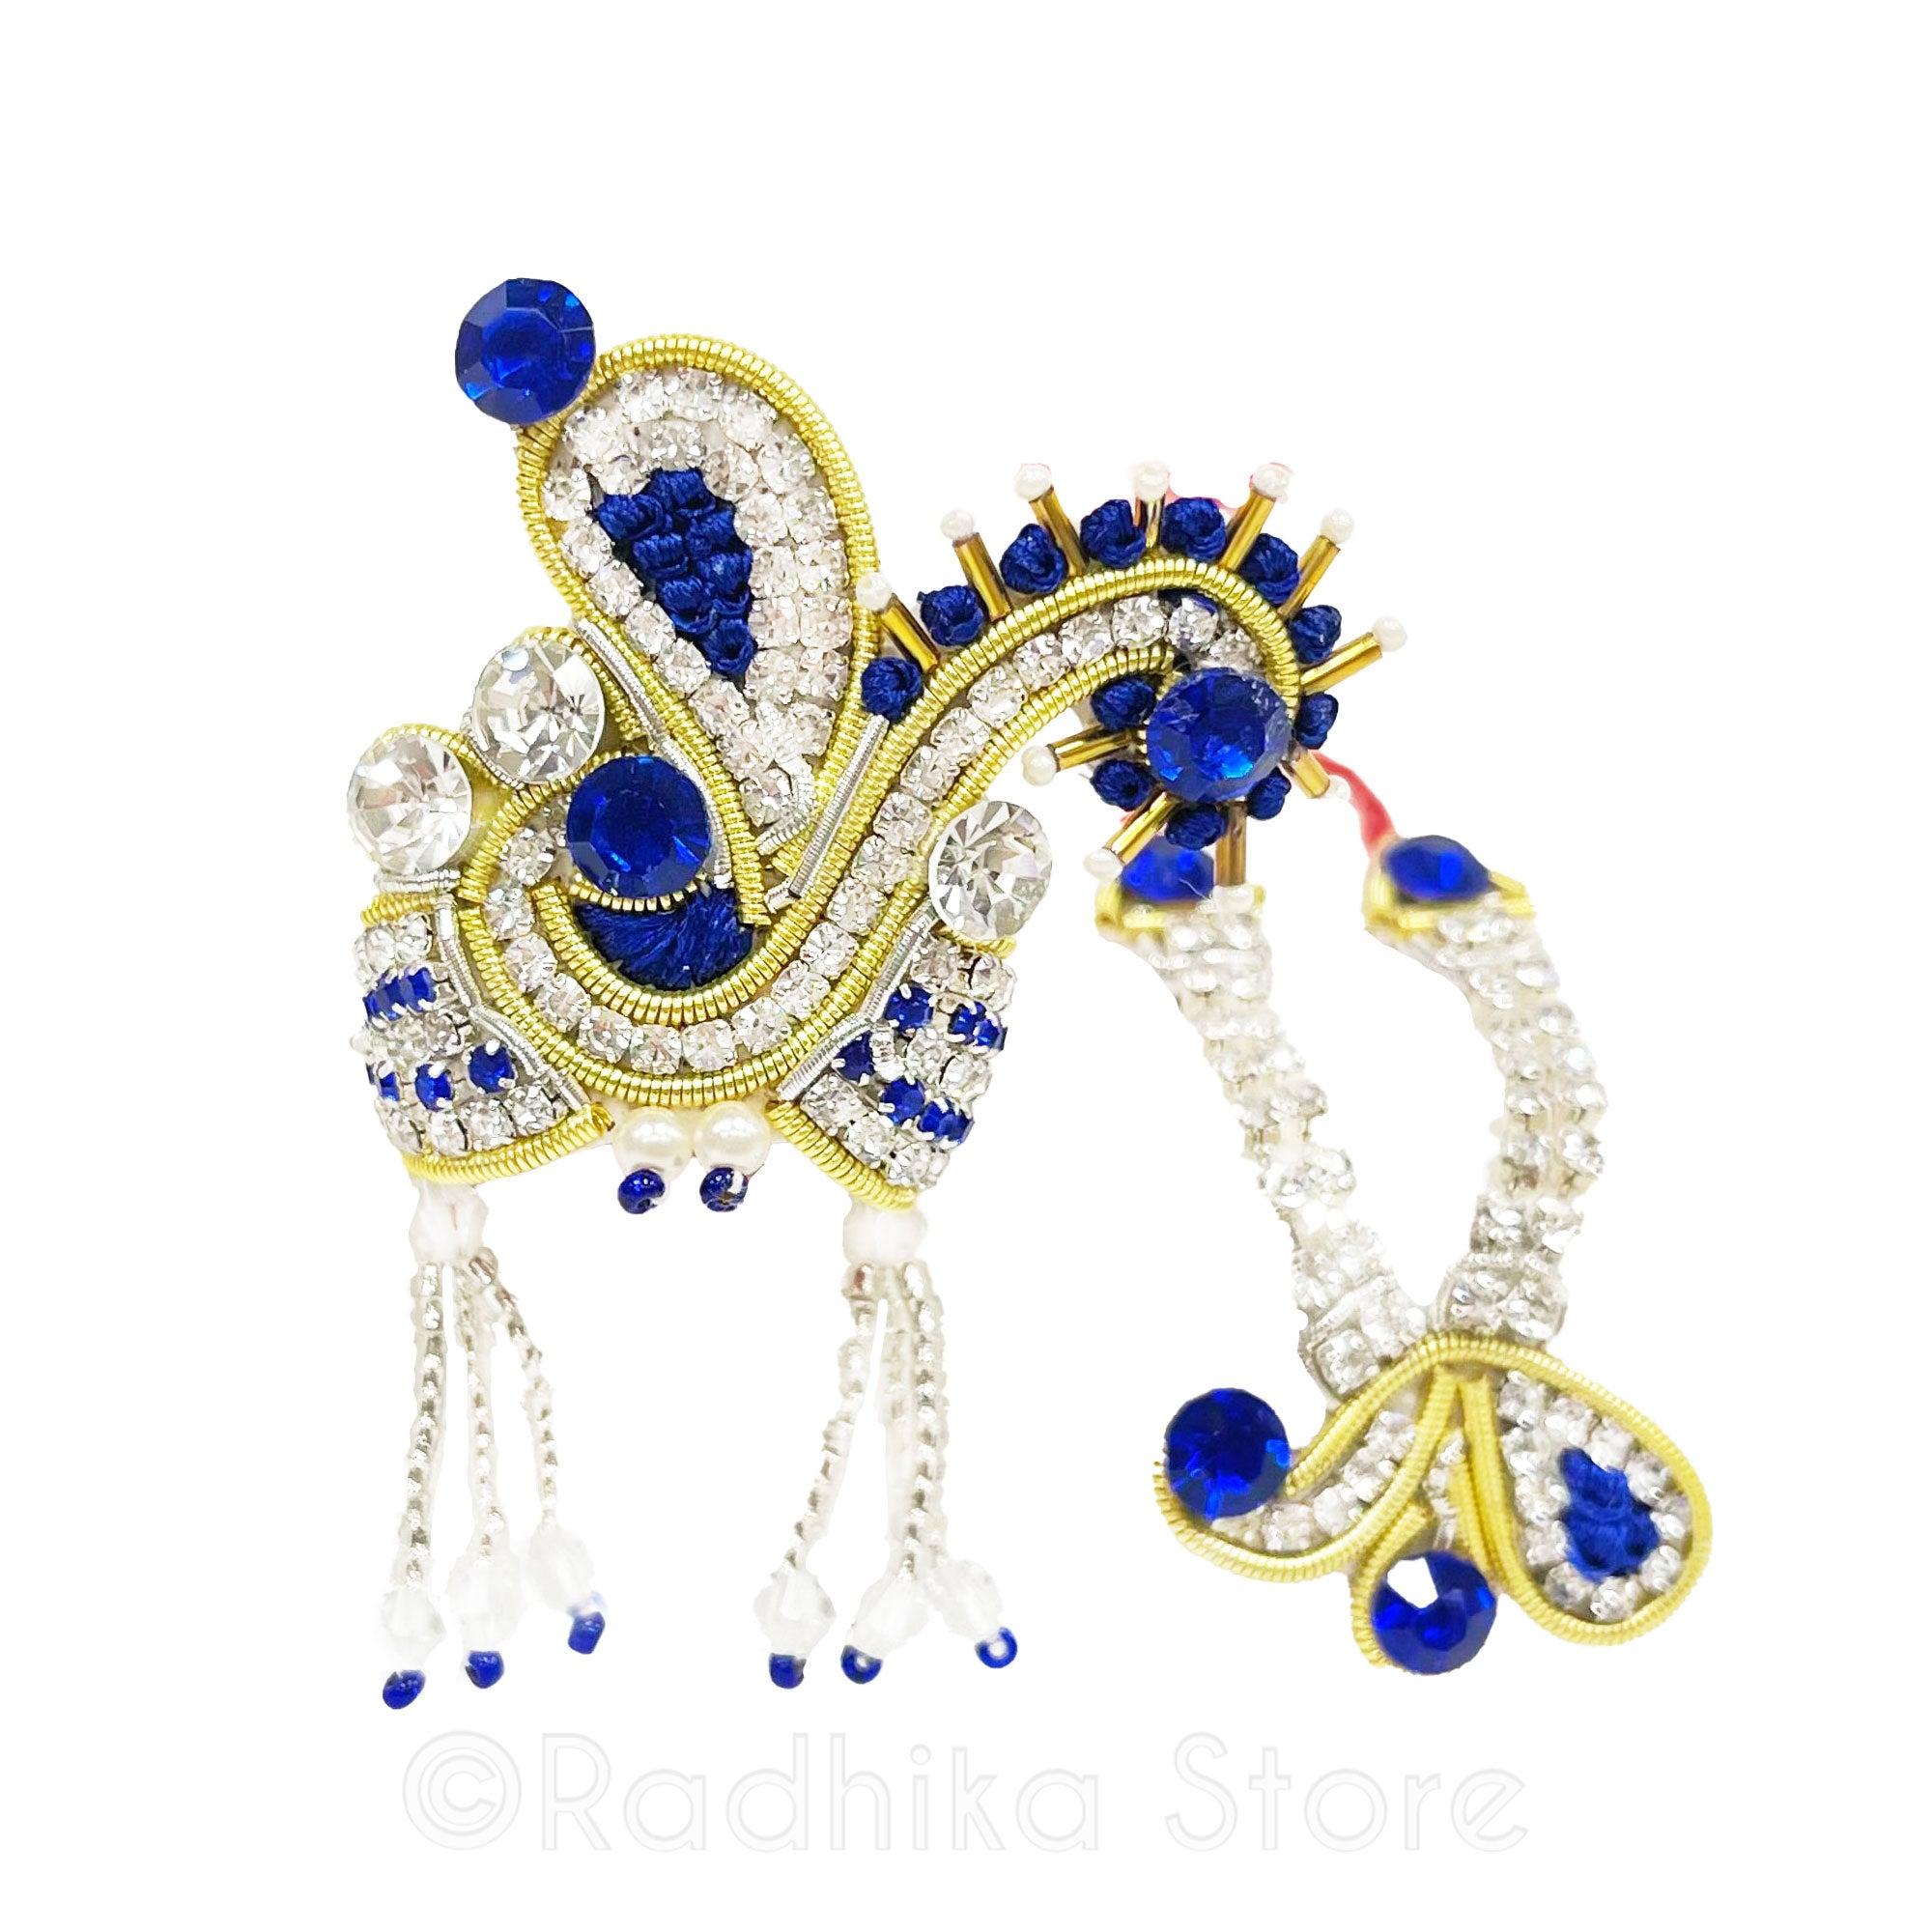 Ganga Sapphire Swan - Deity Crown and Necklace Set